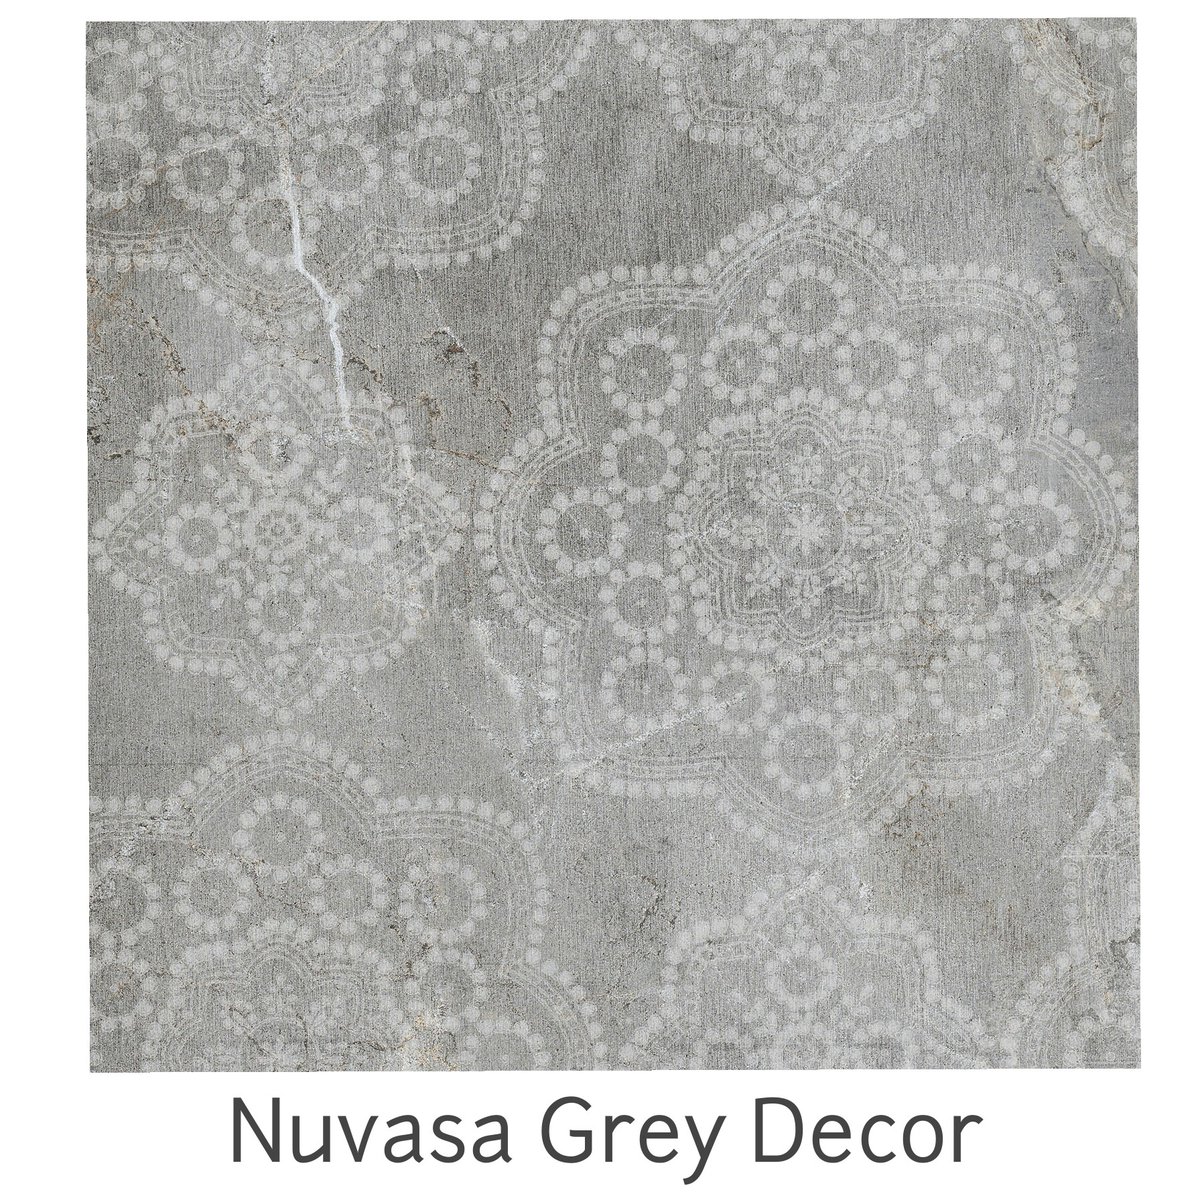 NUVASA GREY DECOR Crystal Granite